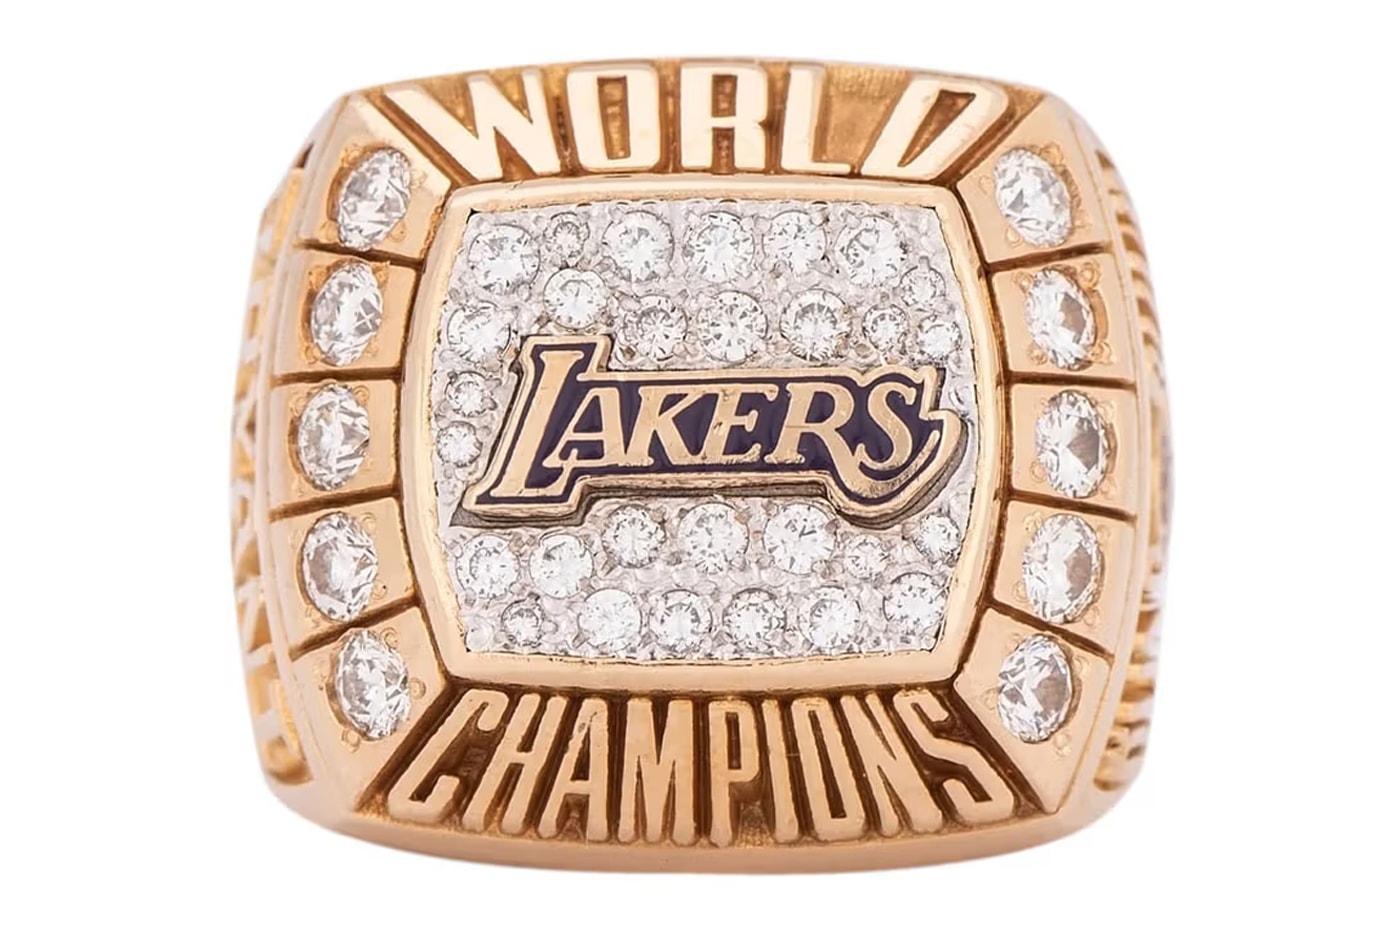 kobe bryant basketball player ring memorabilia golbin auction los angeles lakers championship ring website bidding details